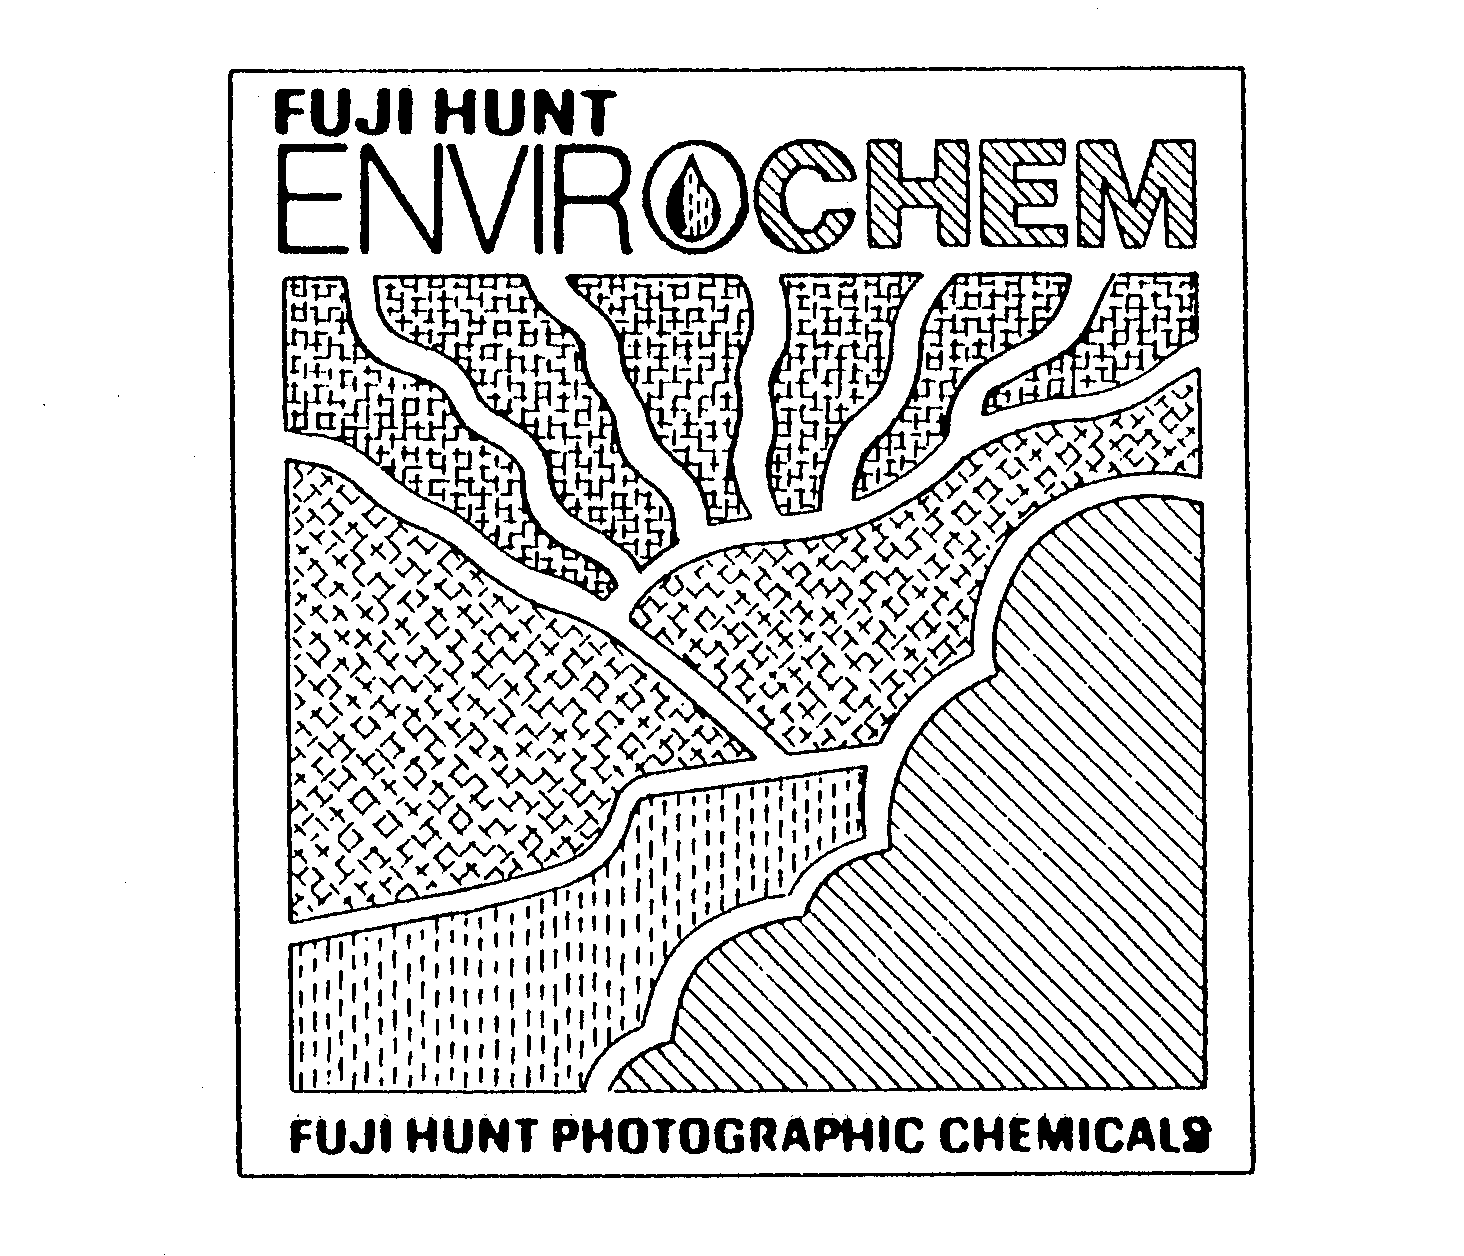  FUJI HUNT ENVIROCHEM FUJI HUNT PHOTOGRAPHIC CHEMICALS